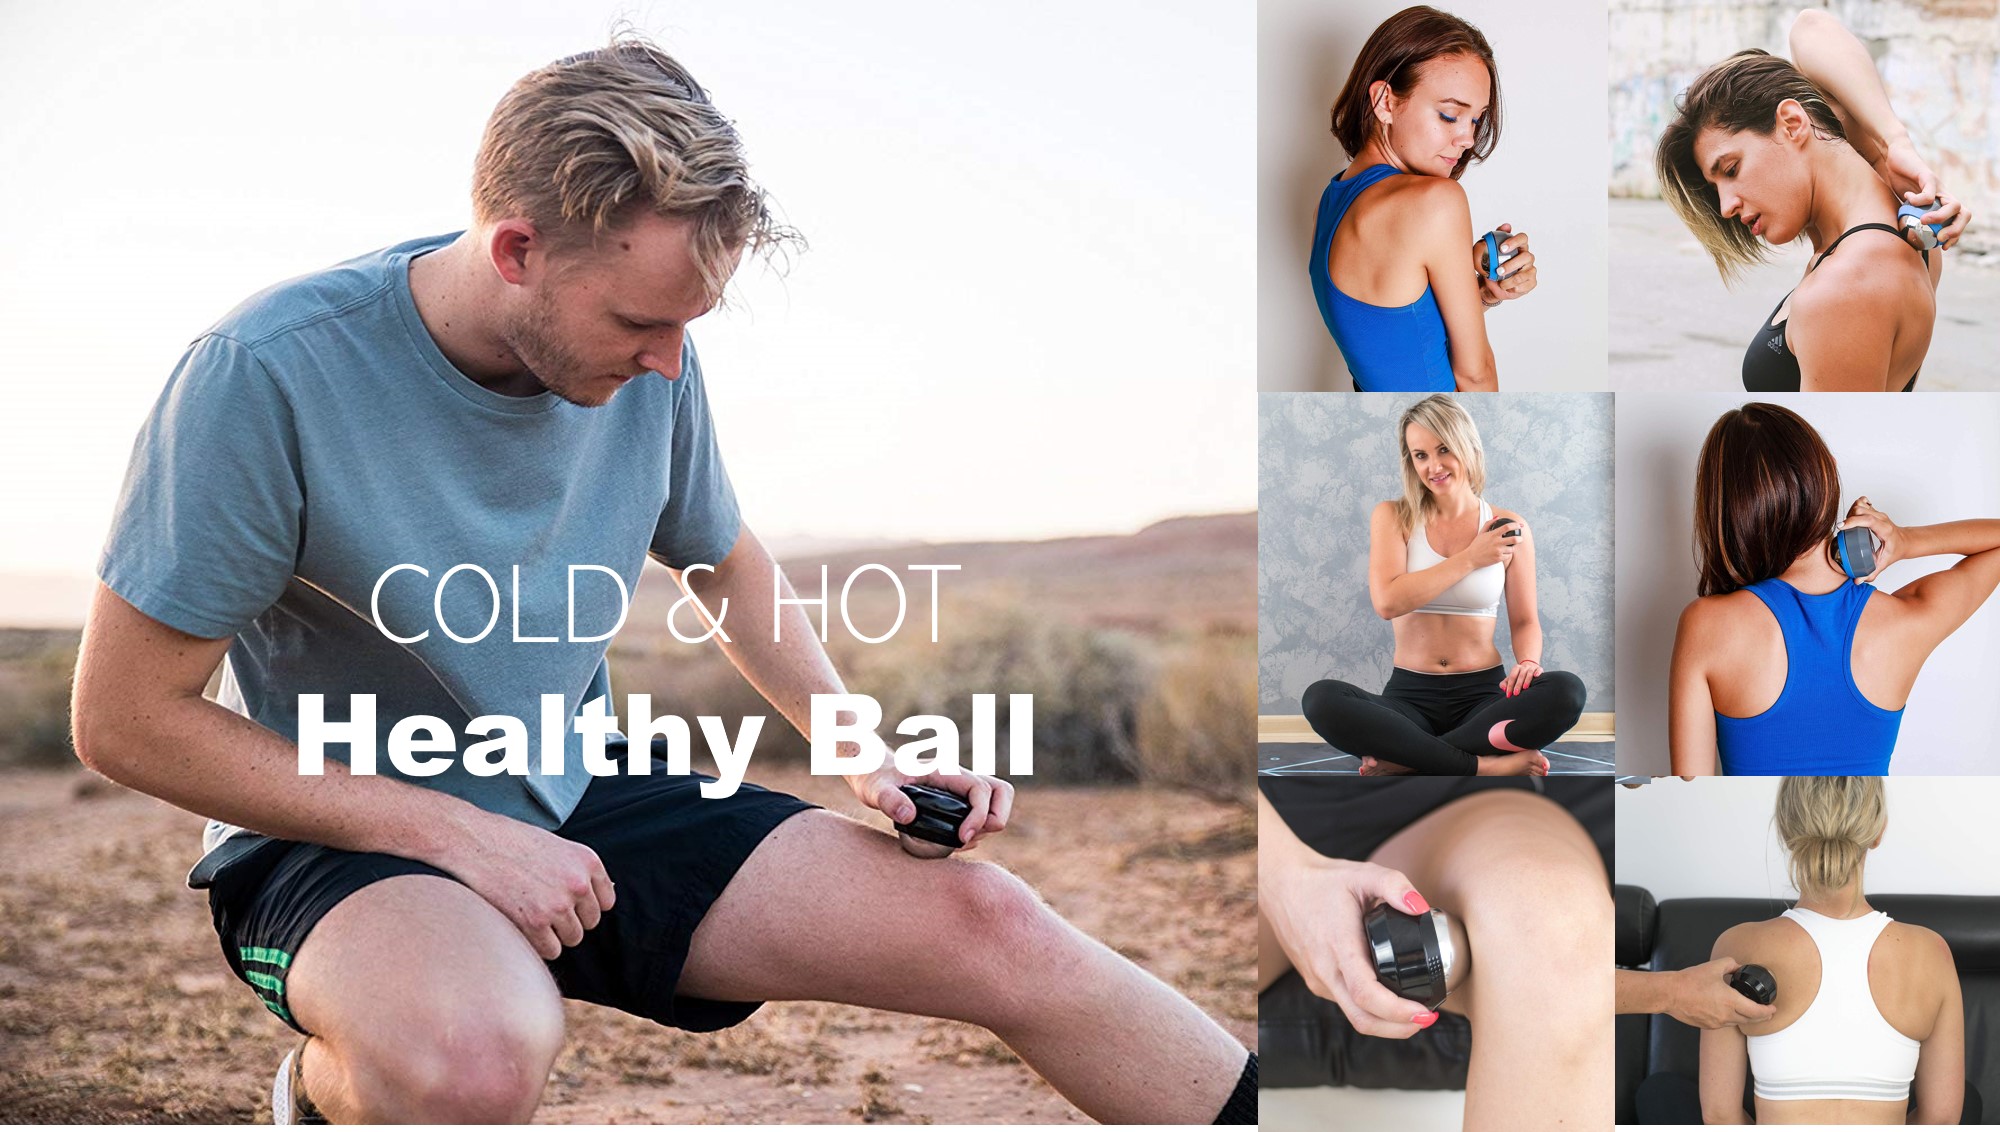 Cold & Hot Healthy Ball 温感ジェル入りボールで身体リフレッシュ ストレッチ